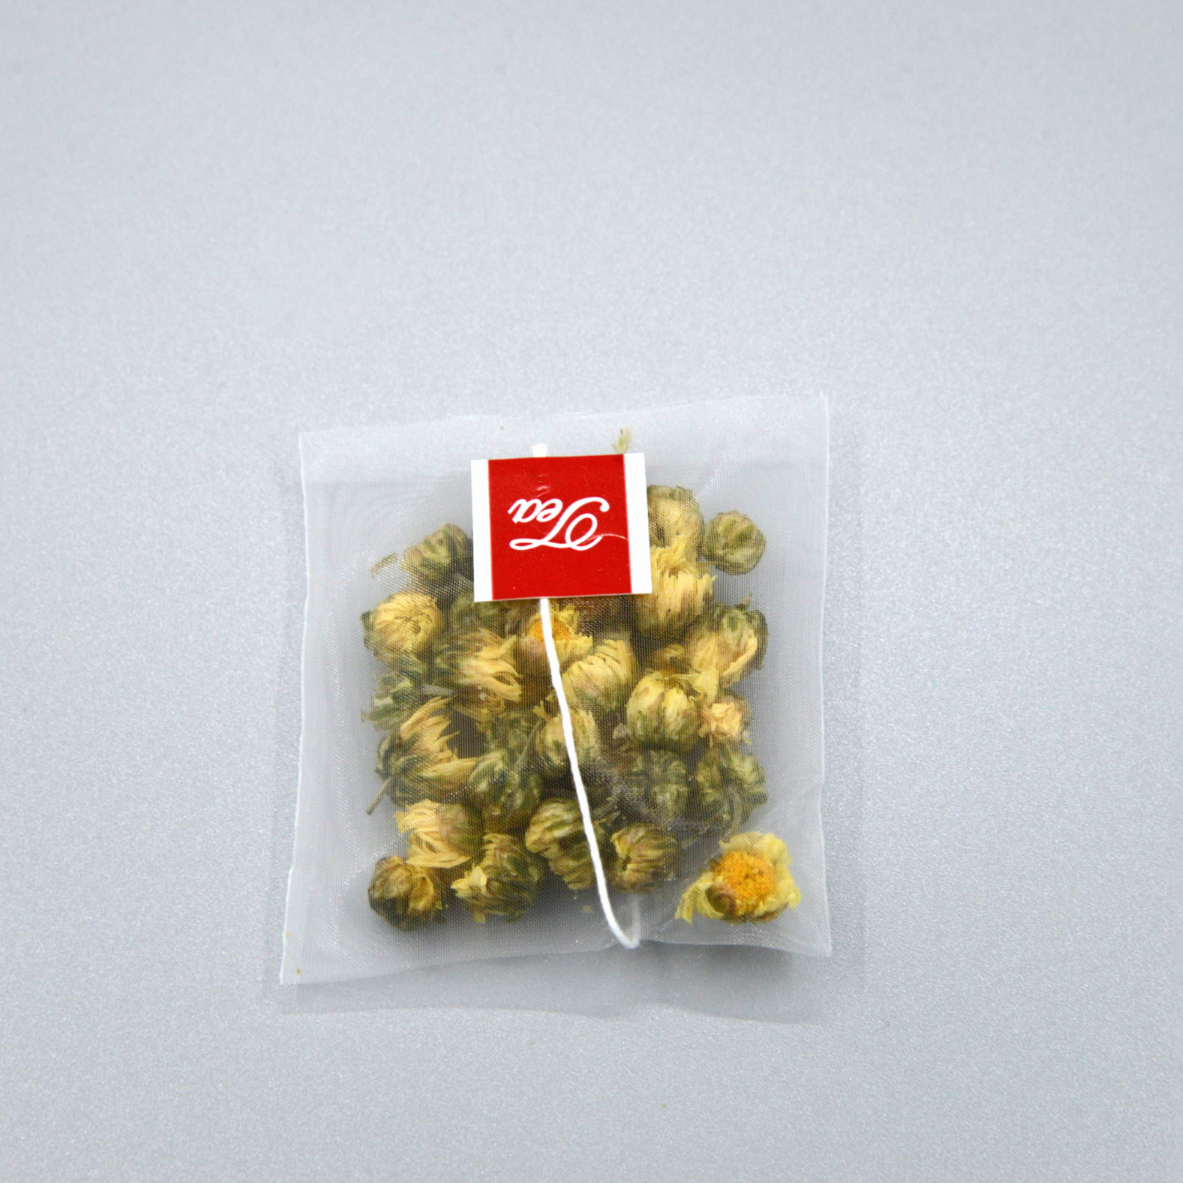 Environmentally Friendly Material Revolutionizes Tea Packaging: Introducing the EcoTea Bag